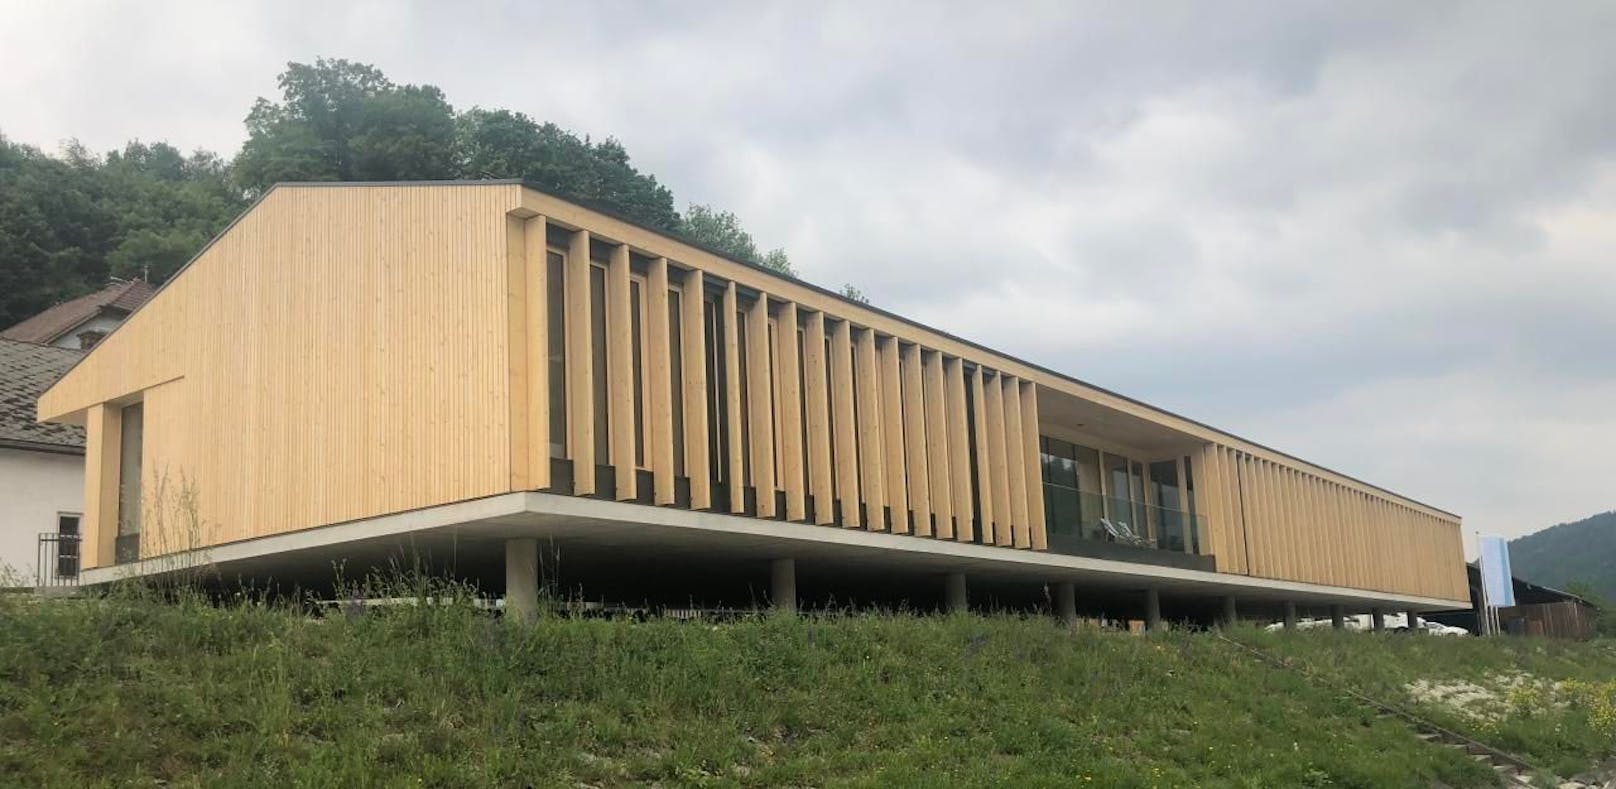 Servicecenter Oberes Donautal eröffnet